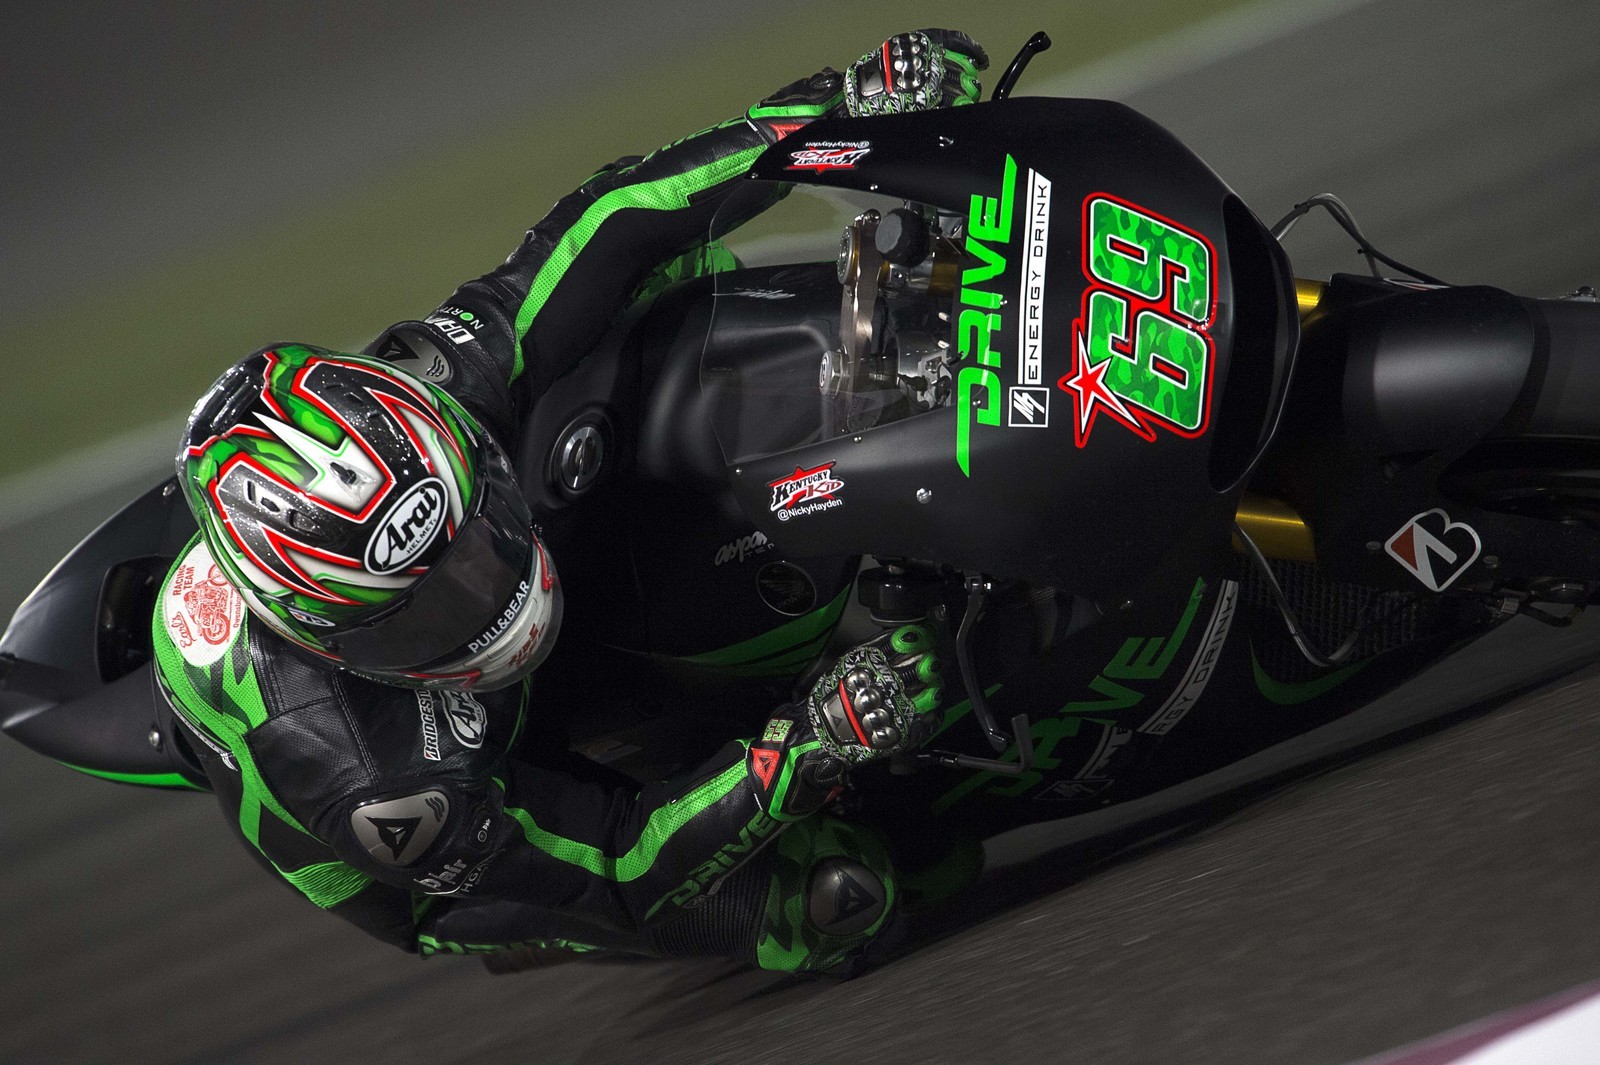 Nicky Hayden Says He's Excited For Start Of 2015 MotoGP Season